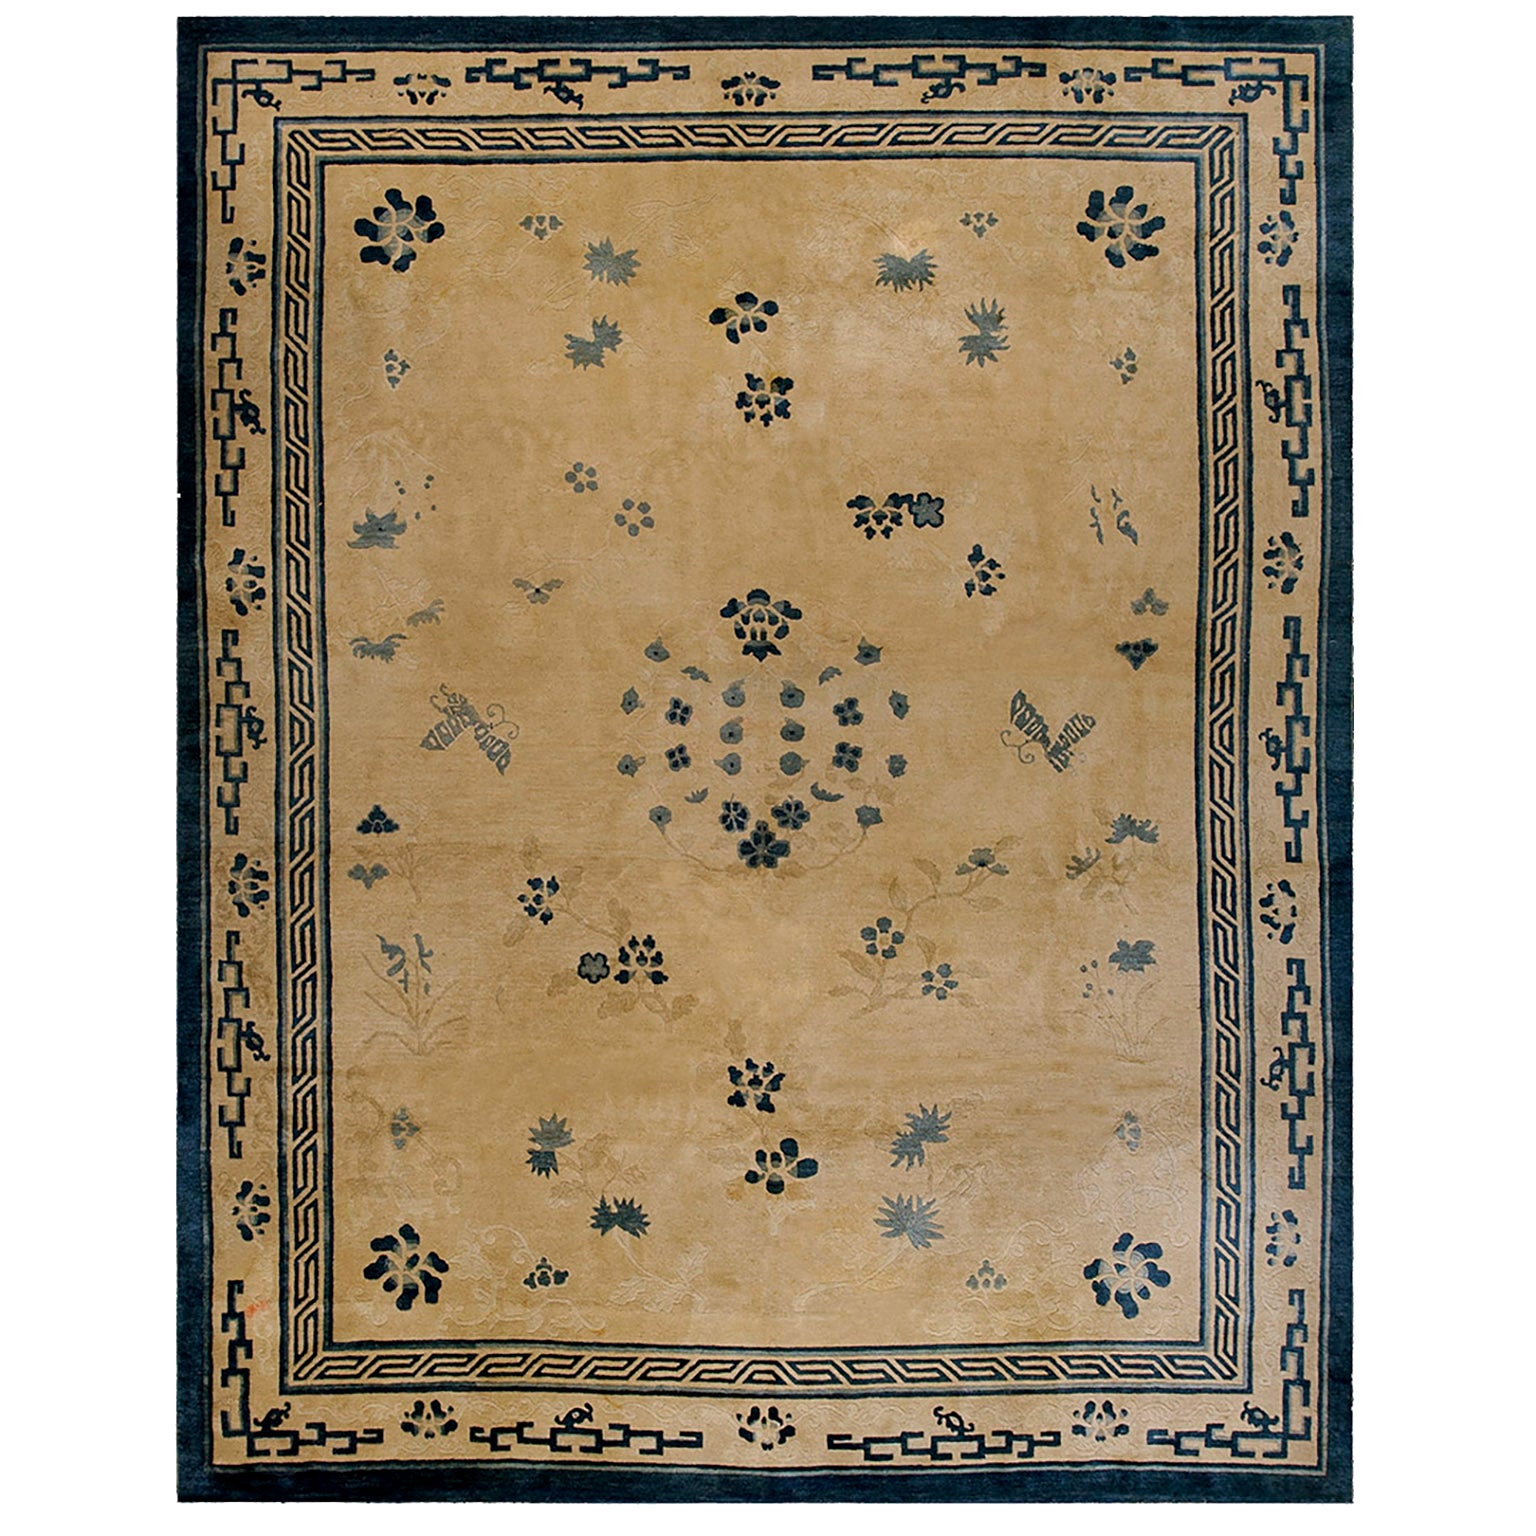 Late 19th Century Chinese Peking Carpet ( 8'4" x 10'2" - 255 x 310 )